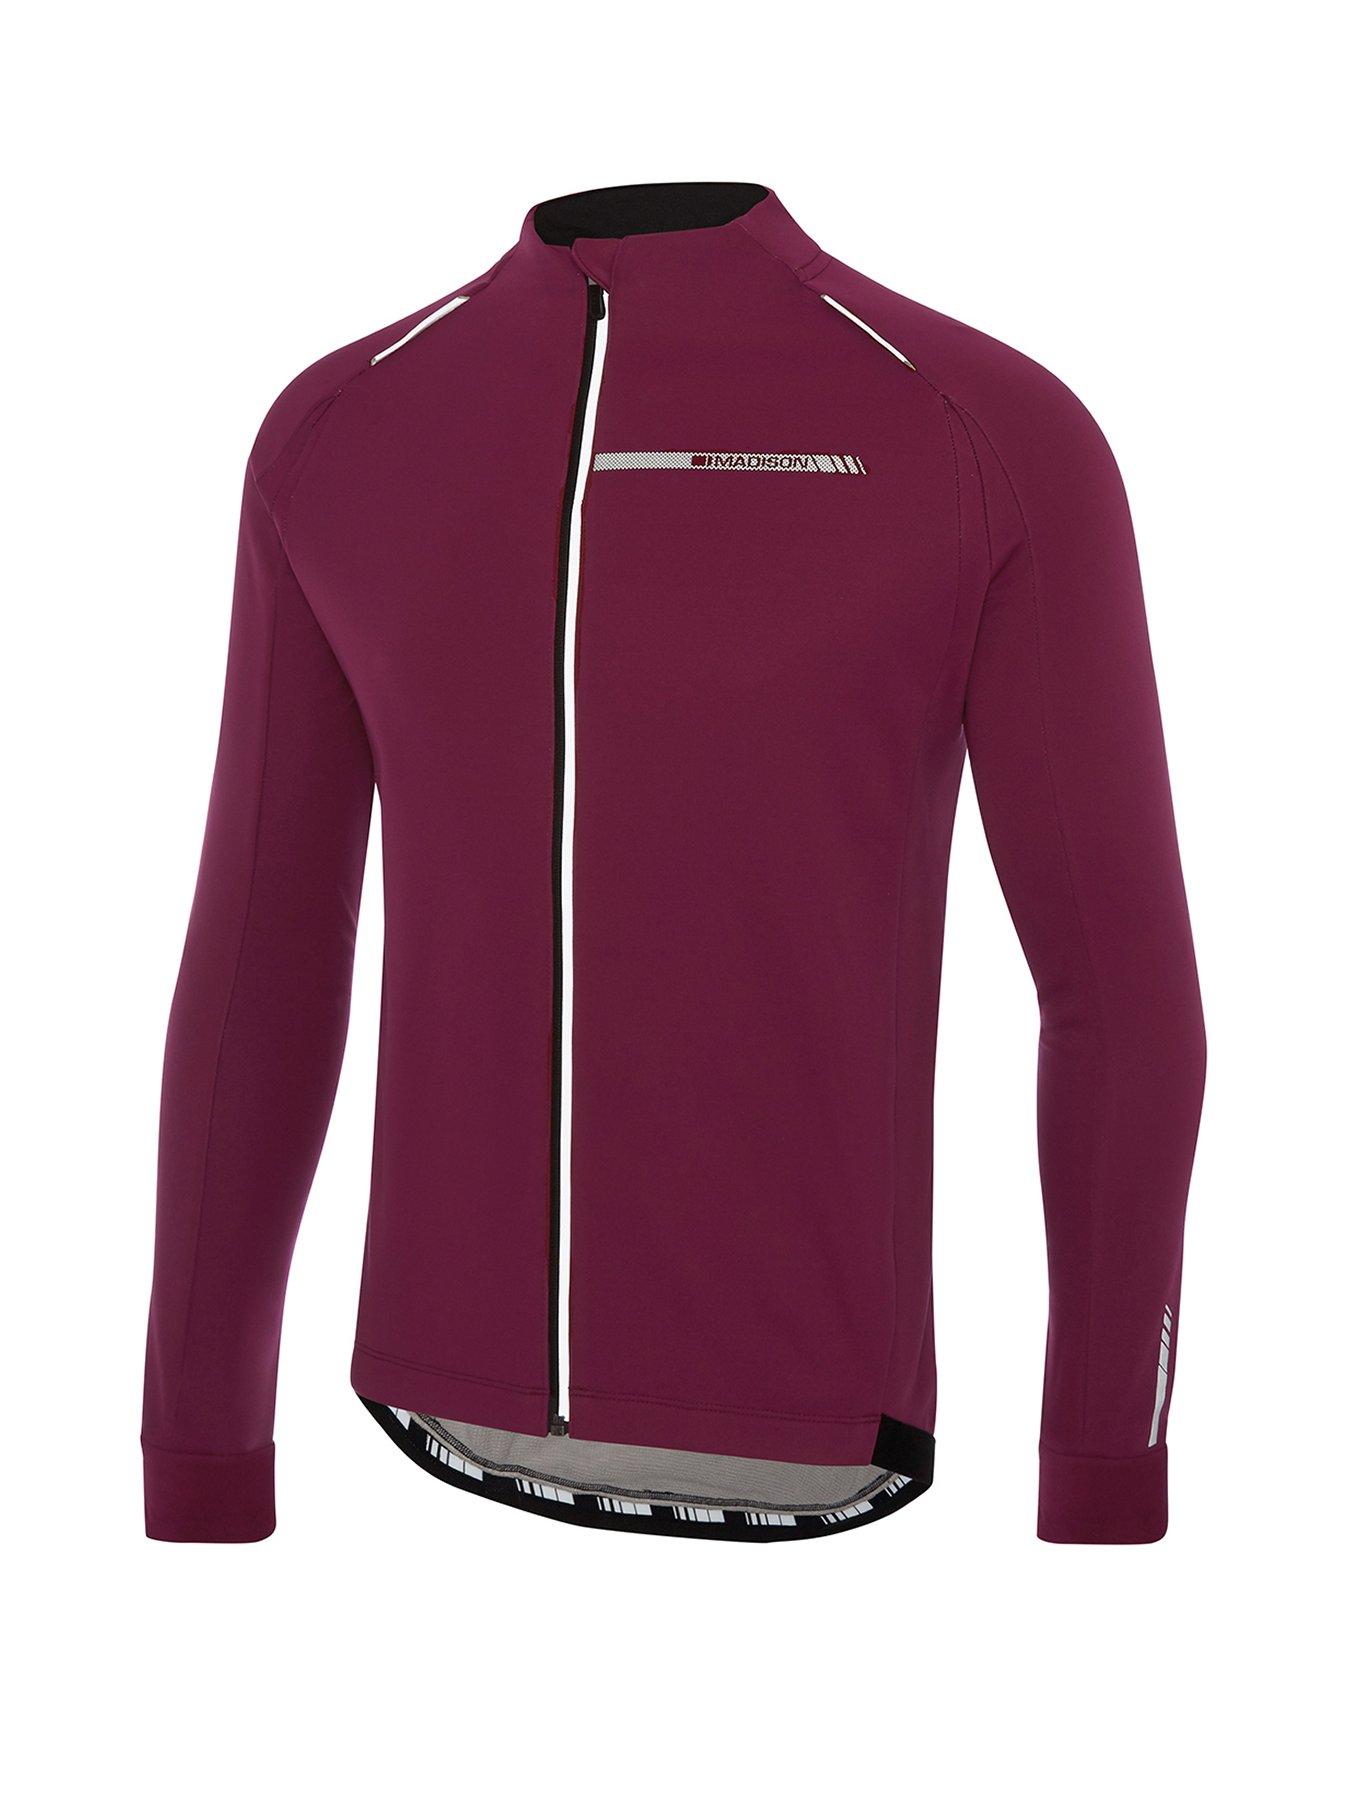 Sportswear Sportive Men's Softshell Cycling Jacket - Classy Burgundy